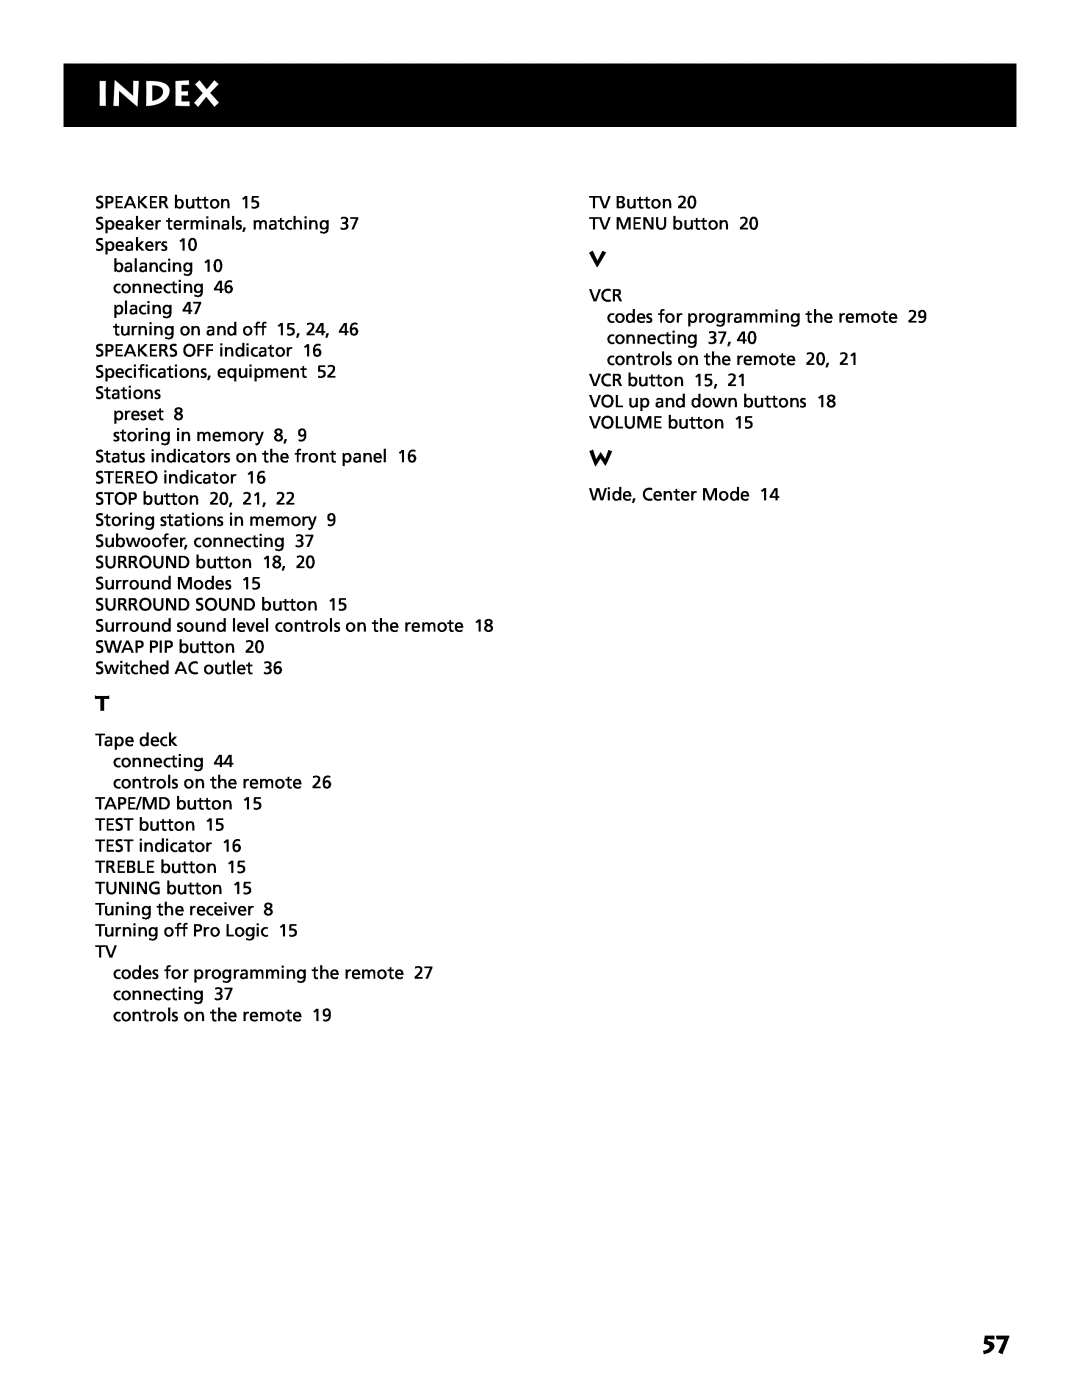 Electrohome RV-3798 manual Index 